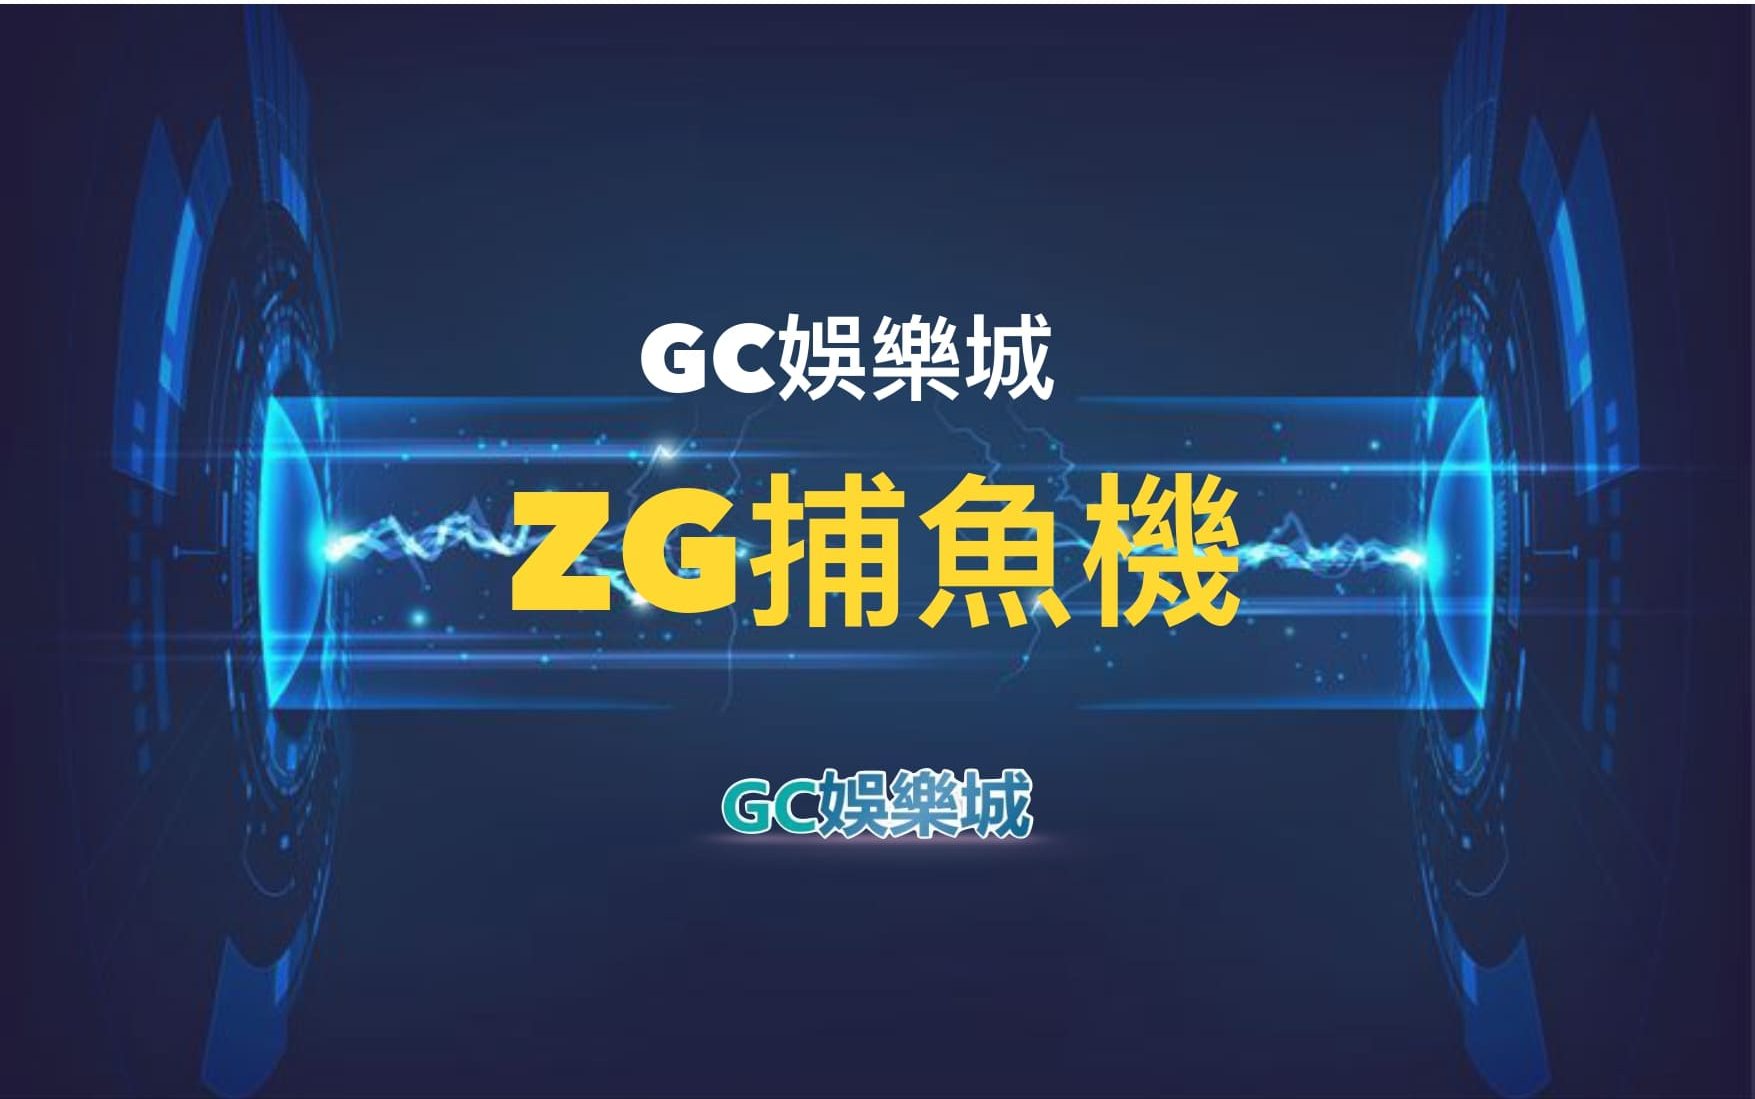 【ZG捕魚機遊戲介紹】體驗最豐富的捕魚遊戲，探索ZG系統的魅力！